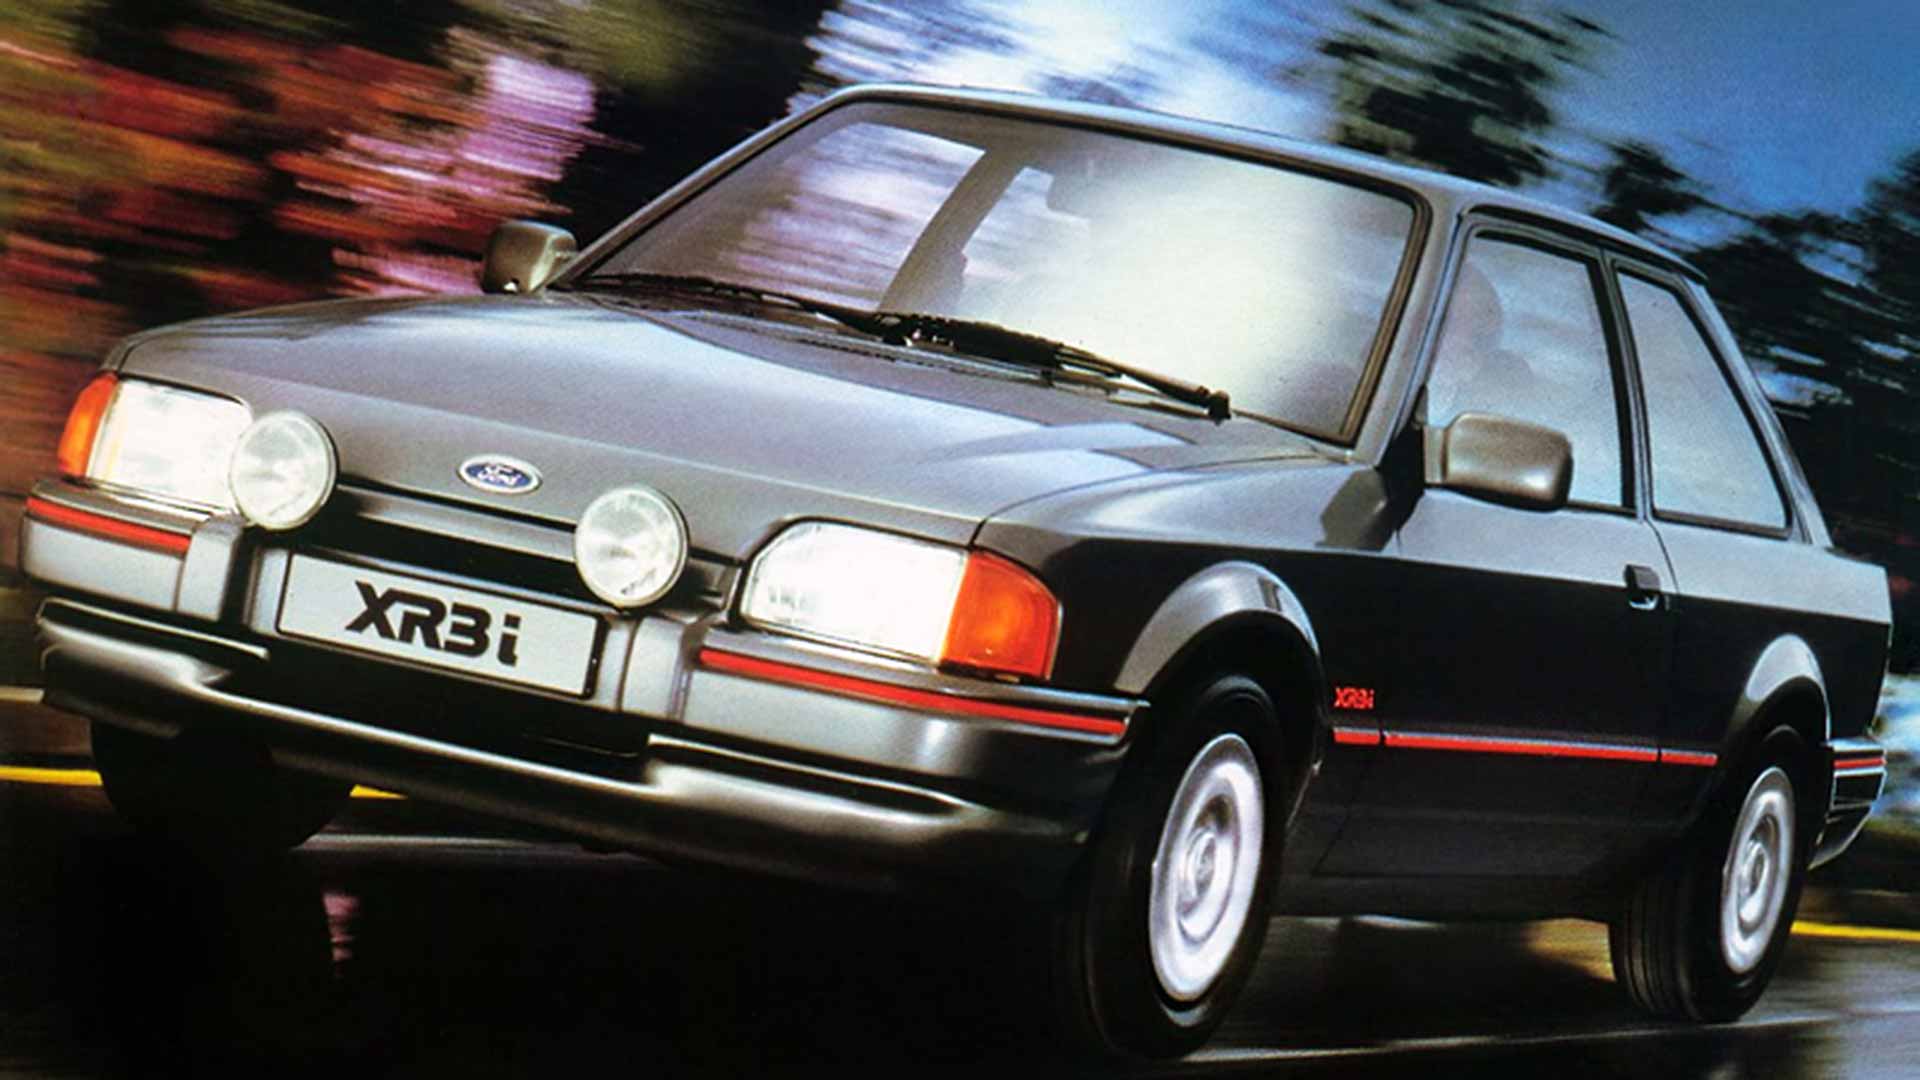 1986 Ford Escort XR3i